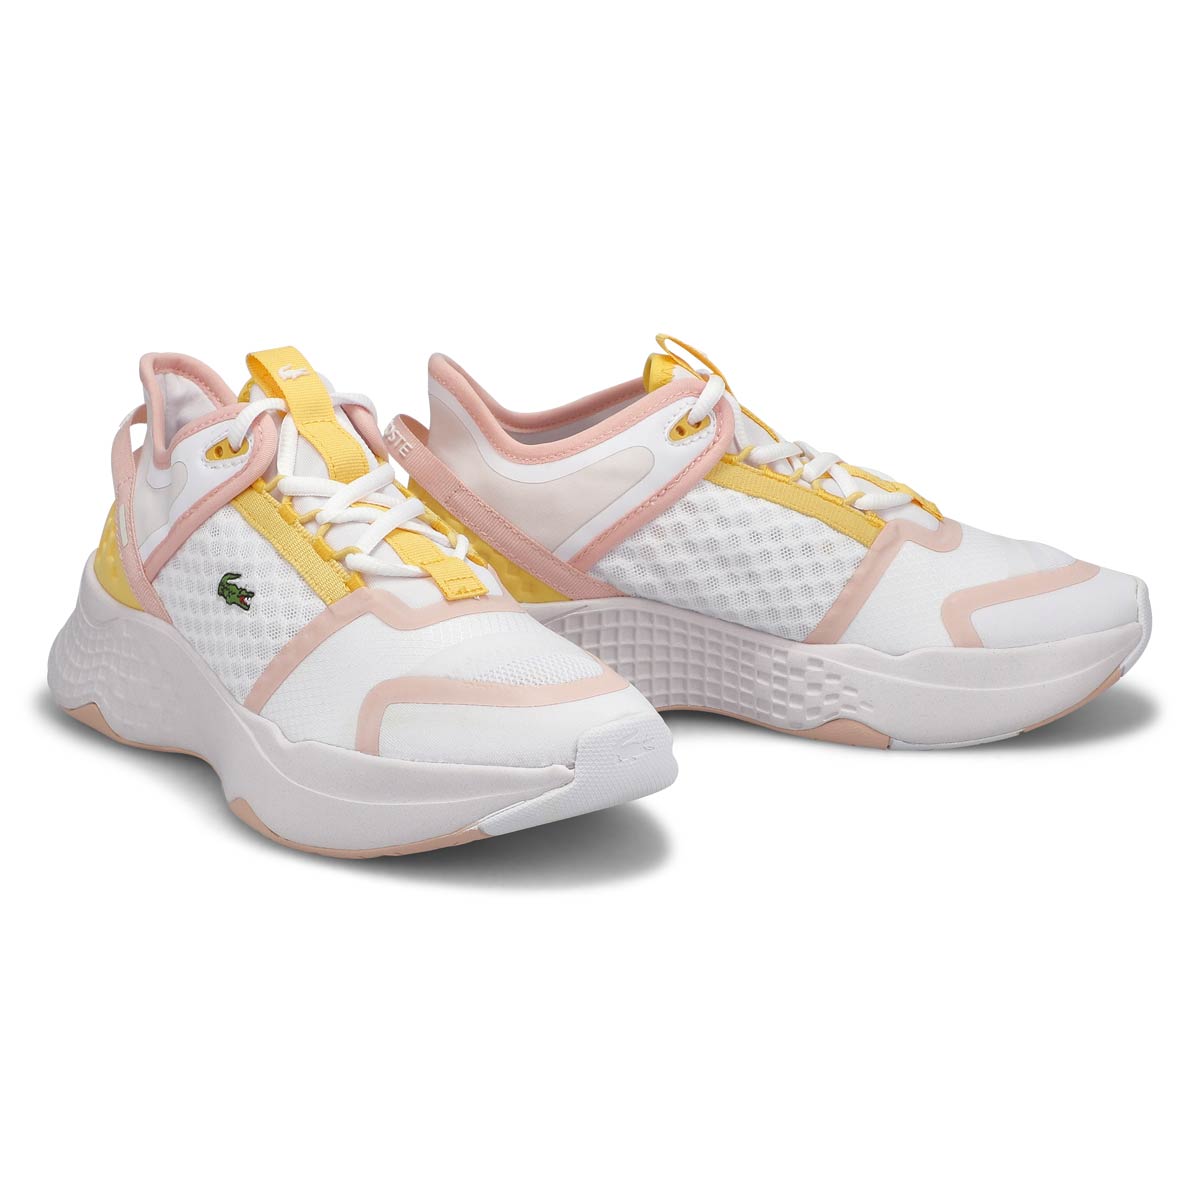 Women's Court-Drive Vnt Sneaker - White/Light Pink